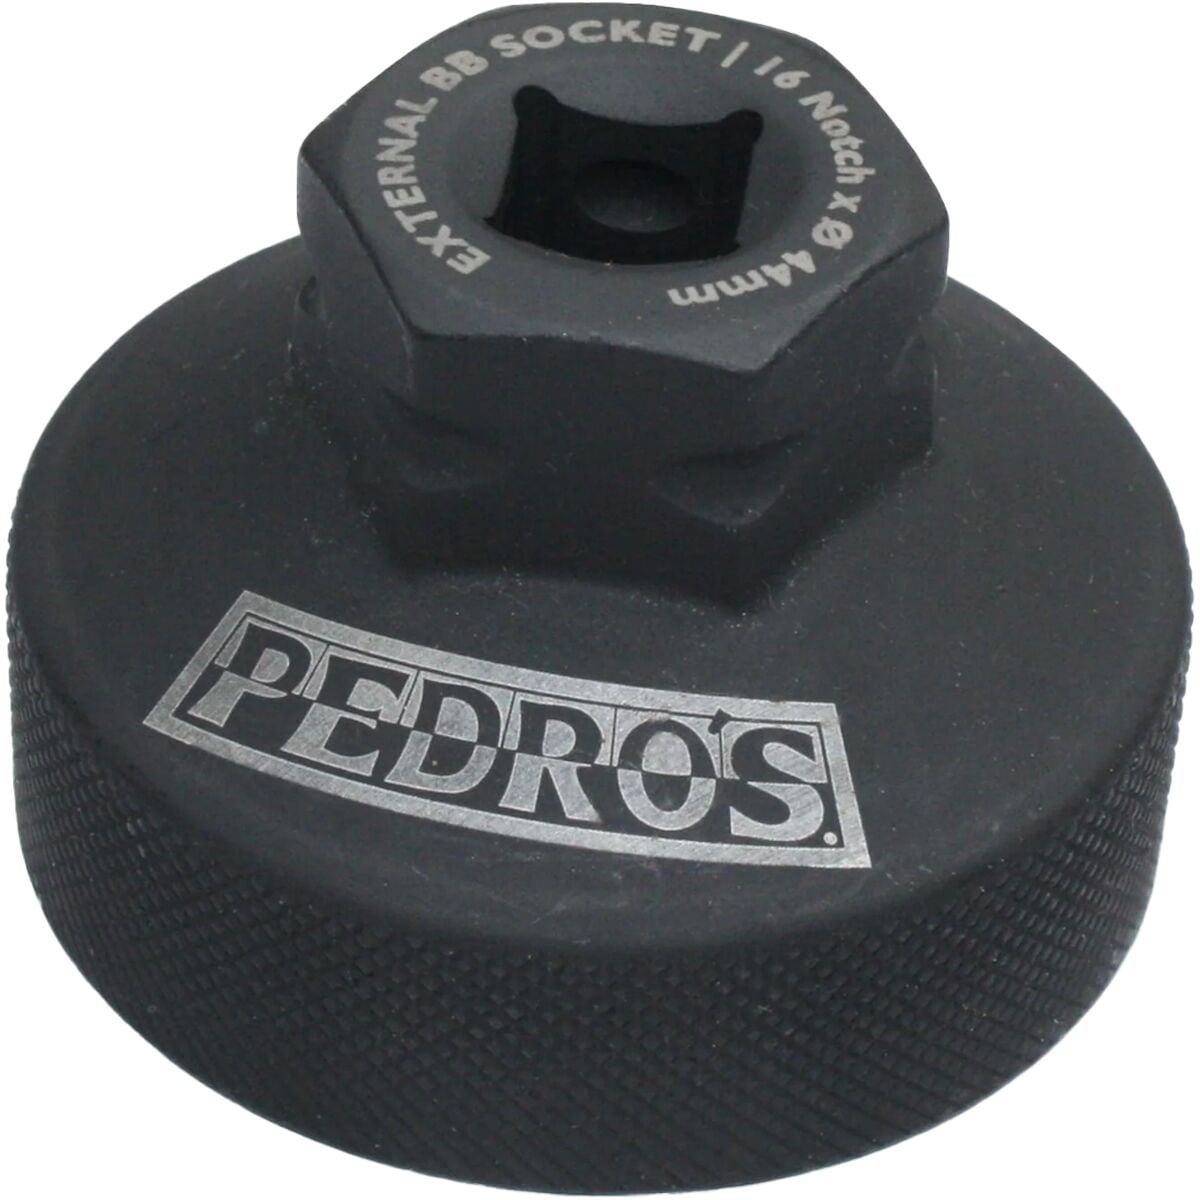 Pedros External Bearing Bottom Bracket Socket